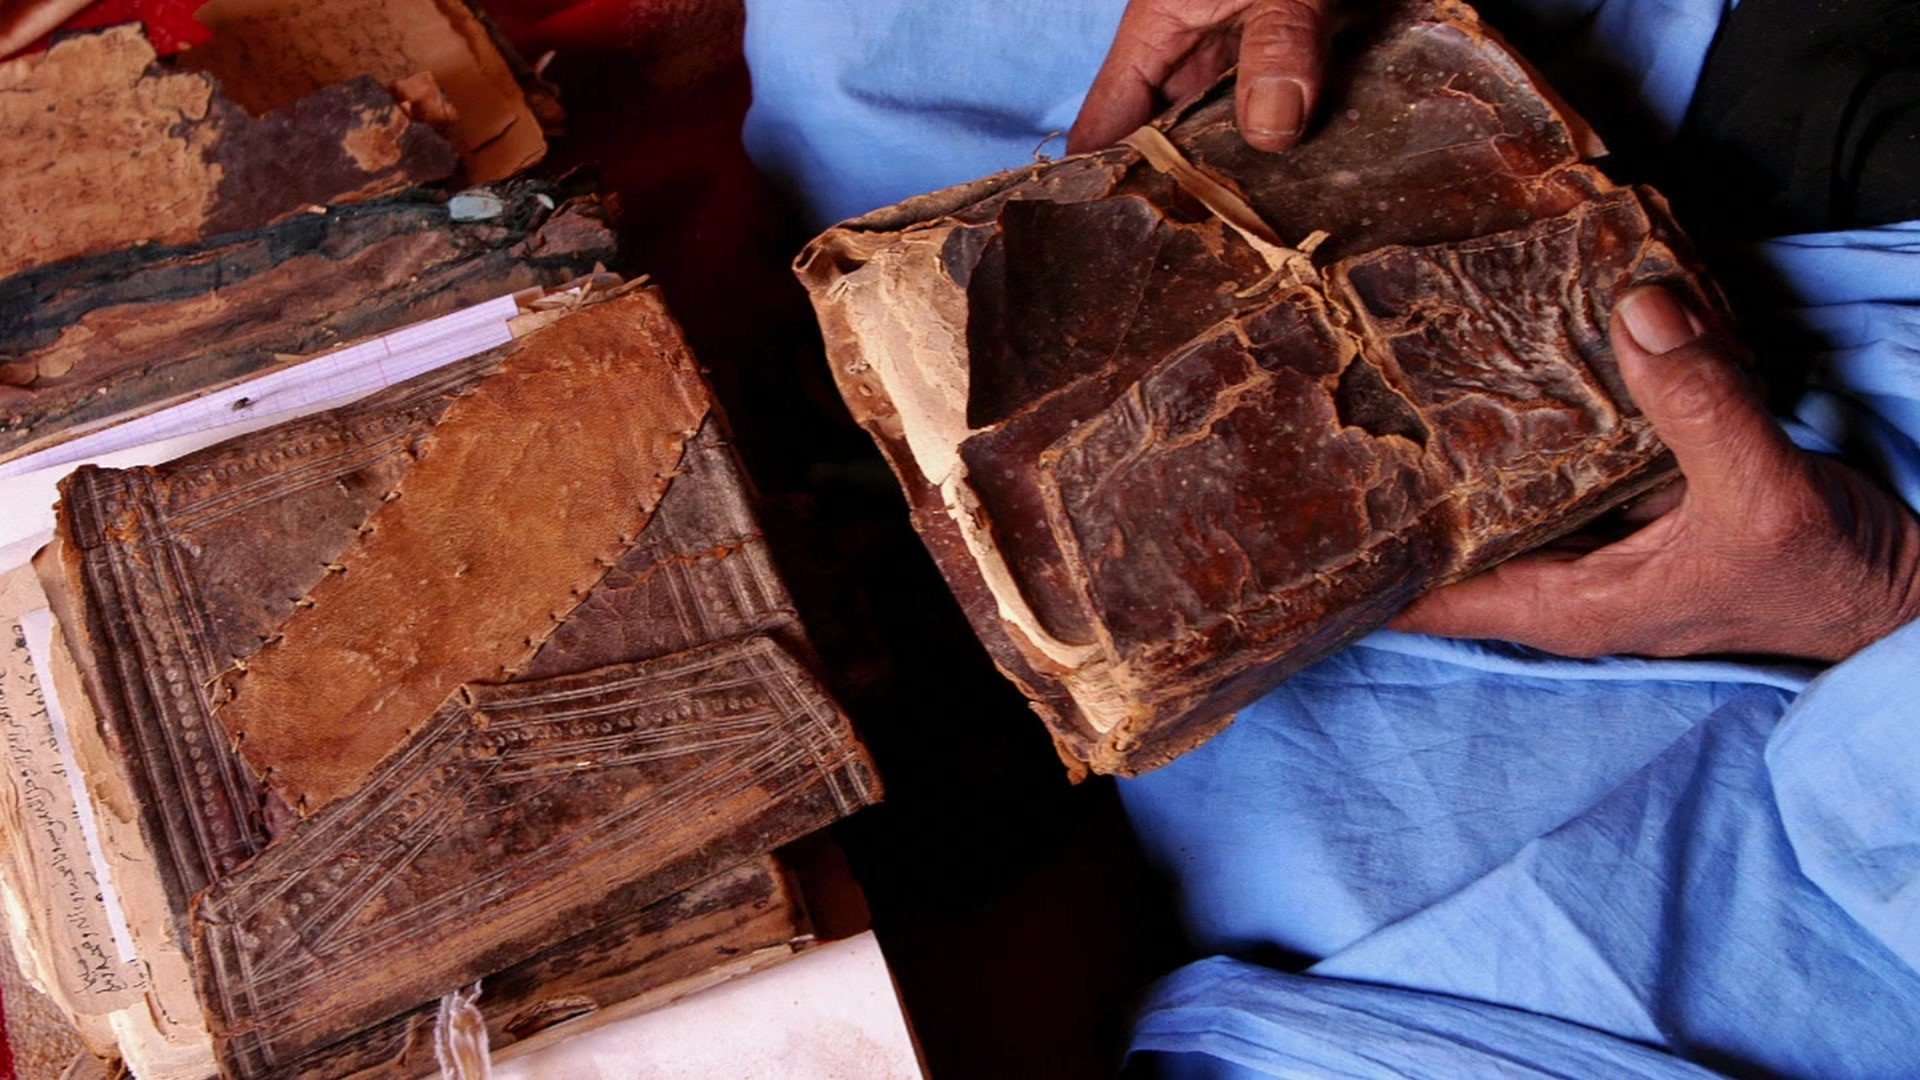 unesco timbuktu manuscripts